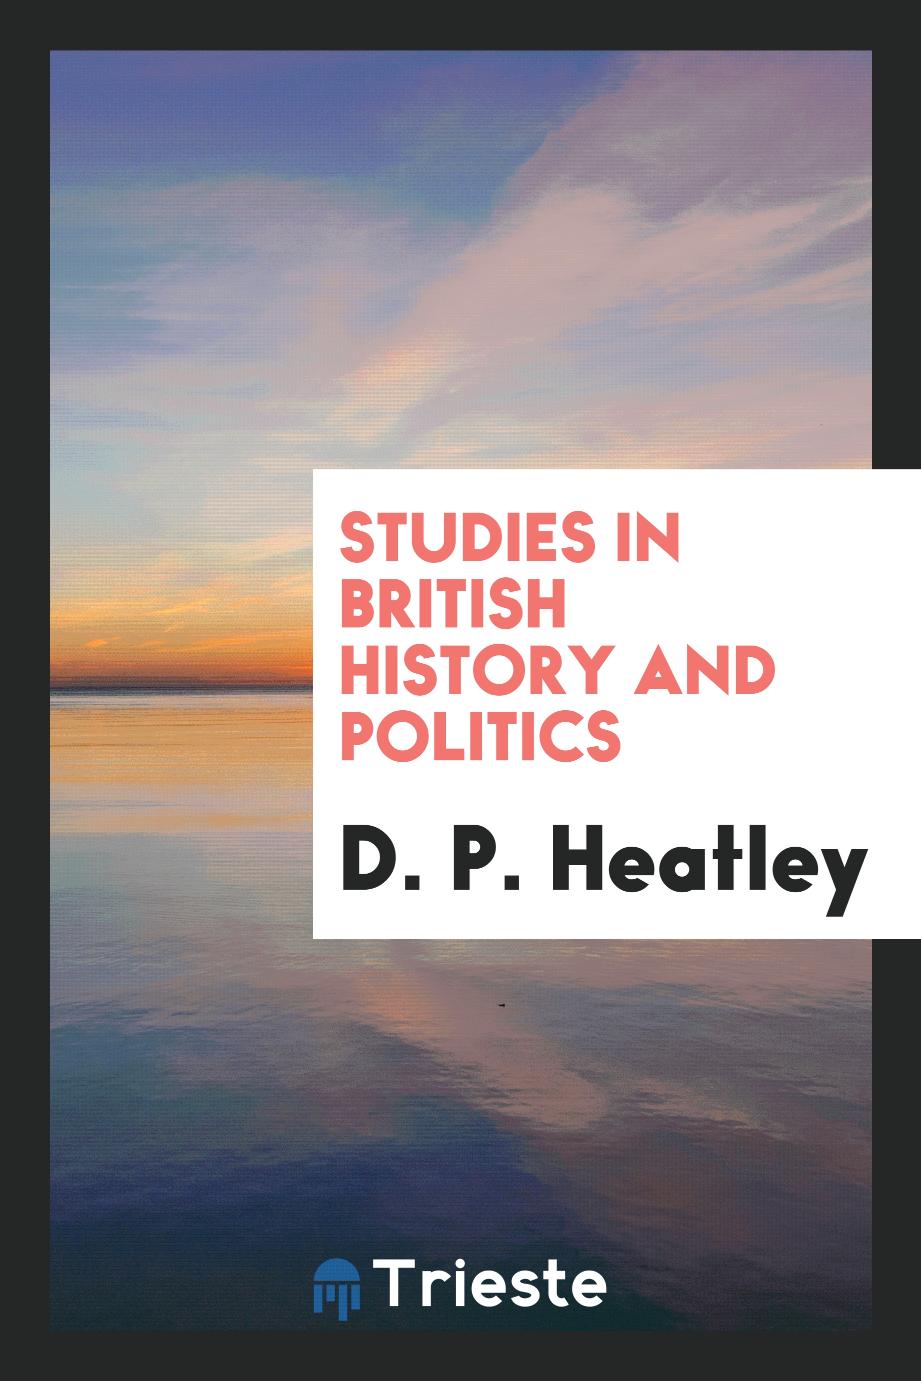 Studies in British history and politics